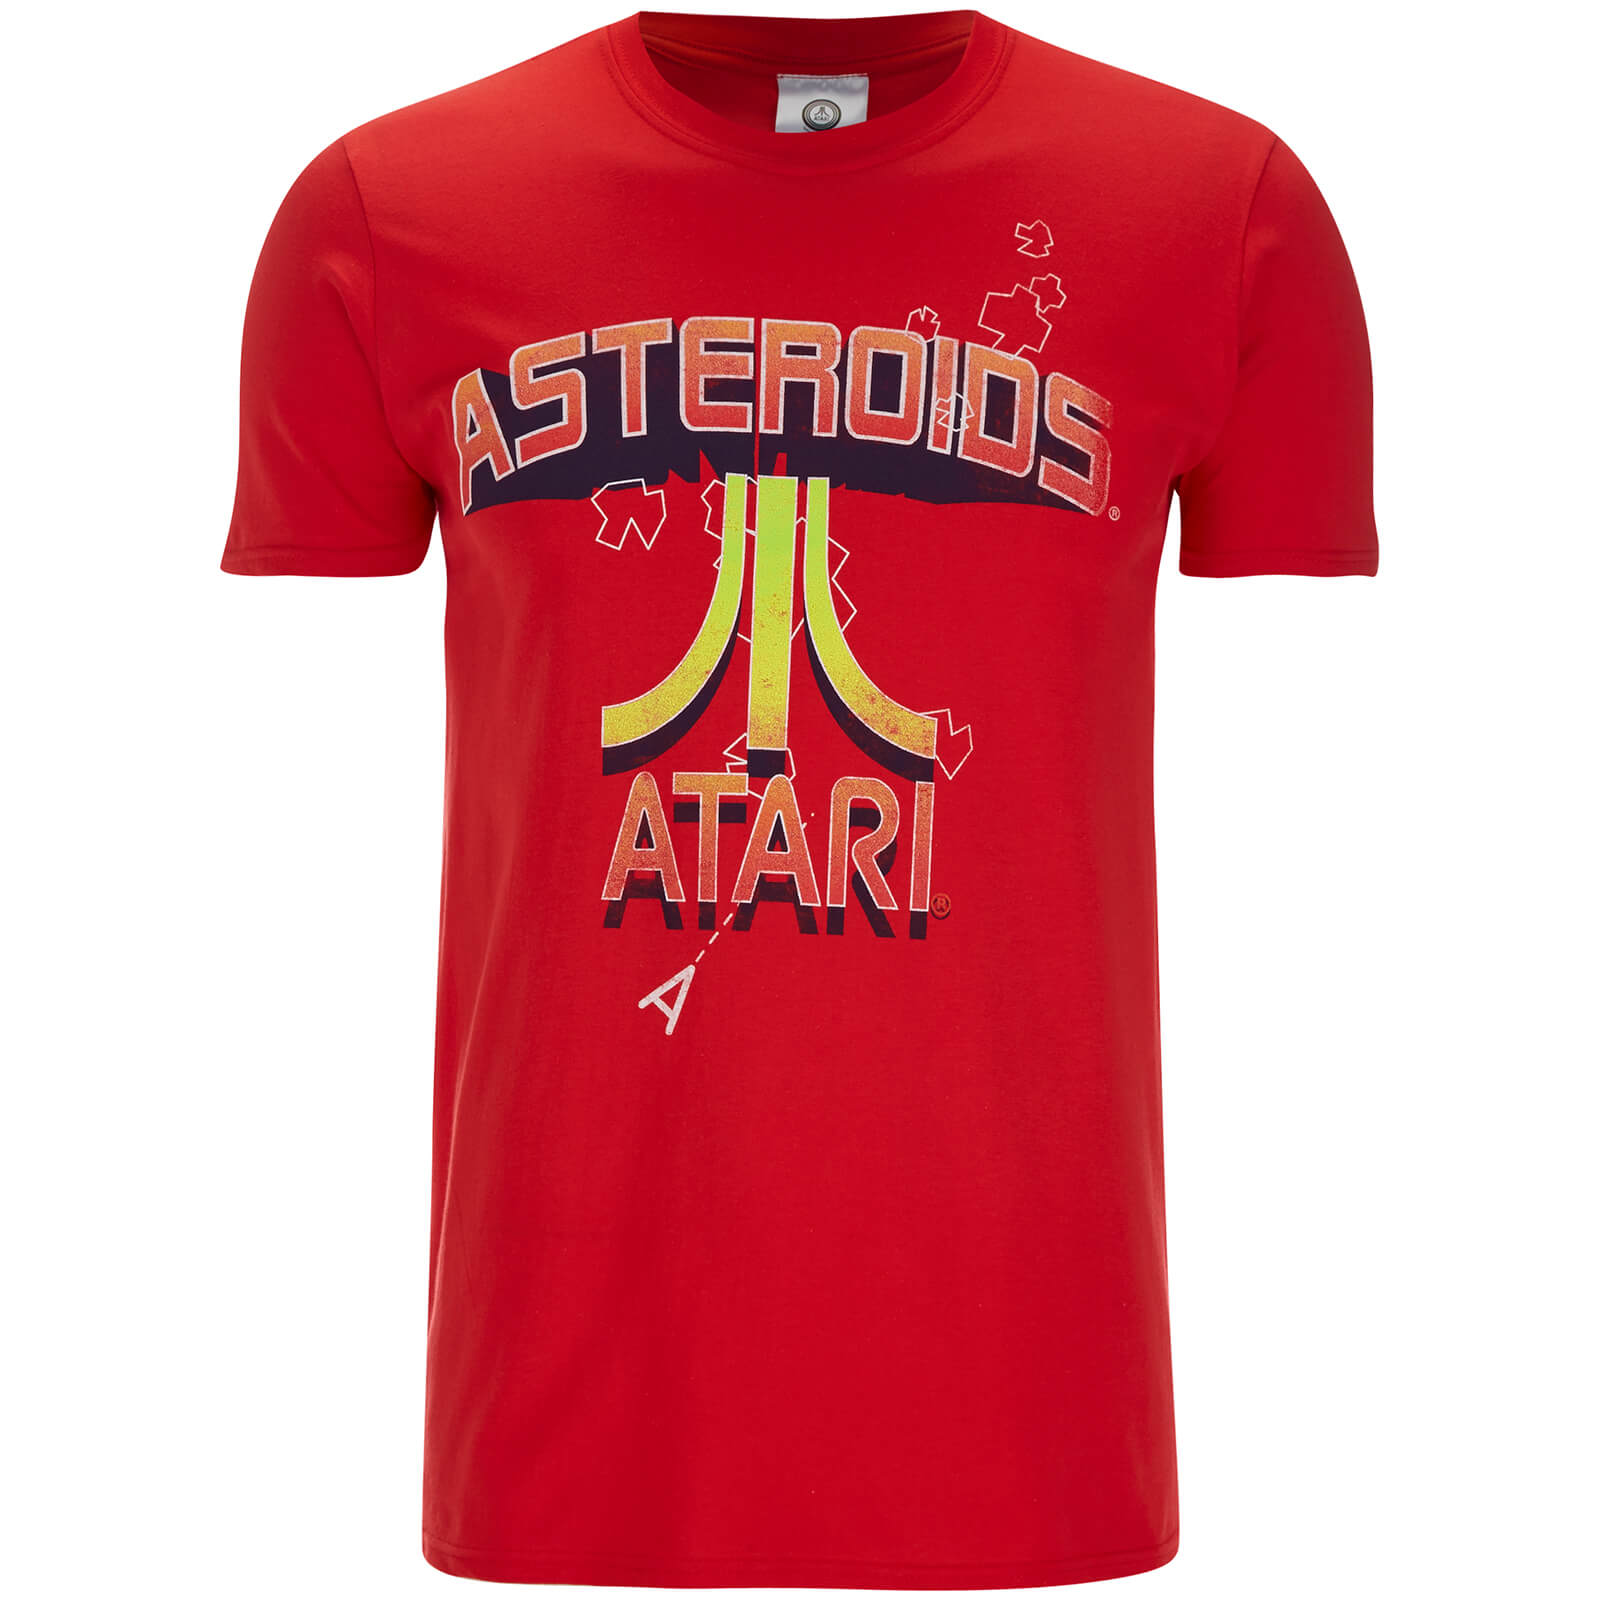 T-Shirt Homme Logo Atari Asteroids - Rouge - S